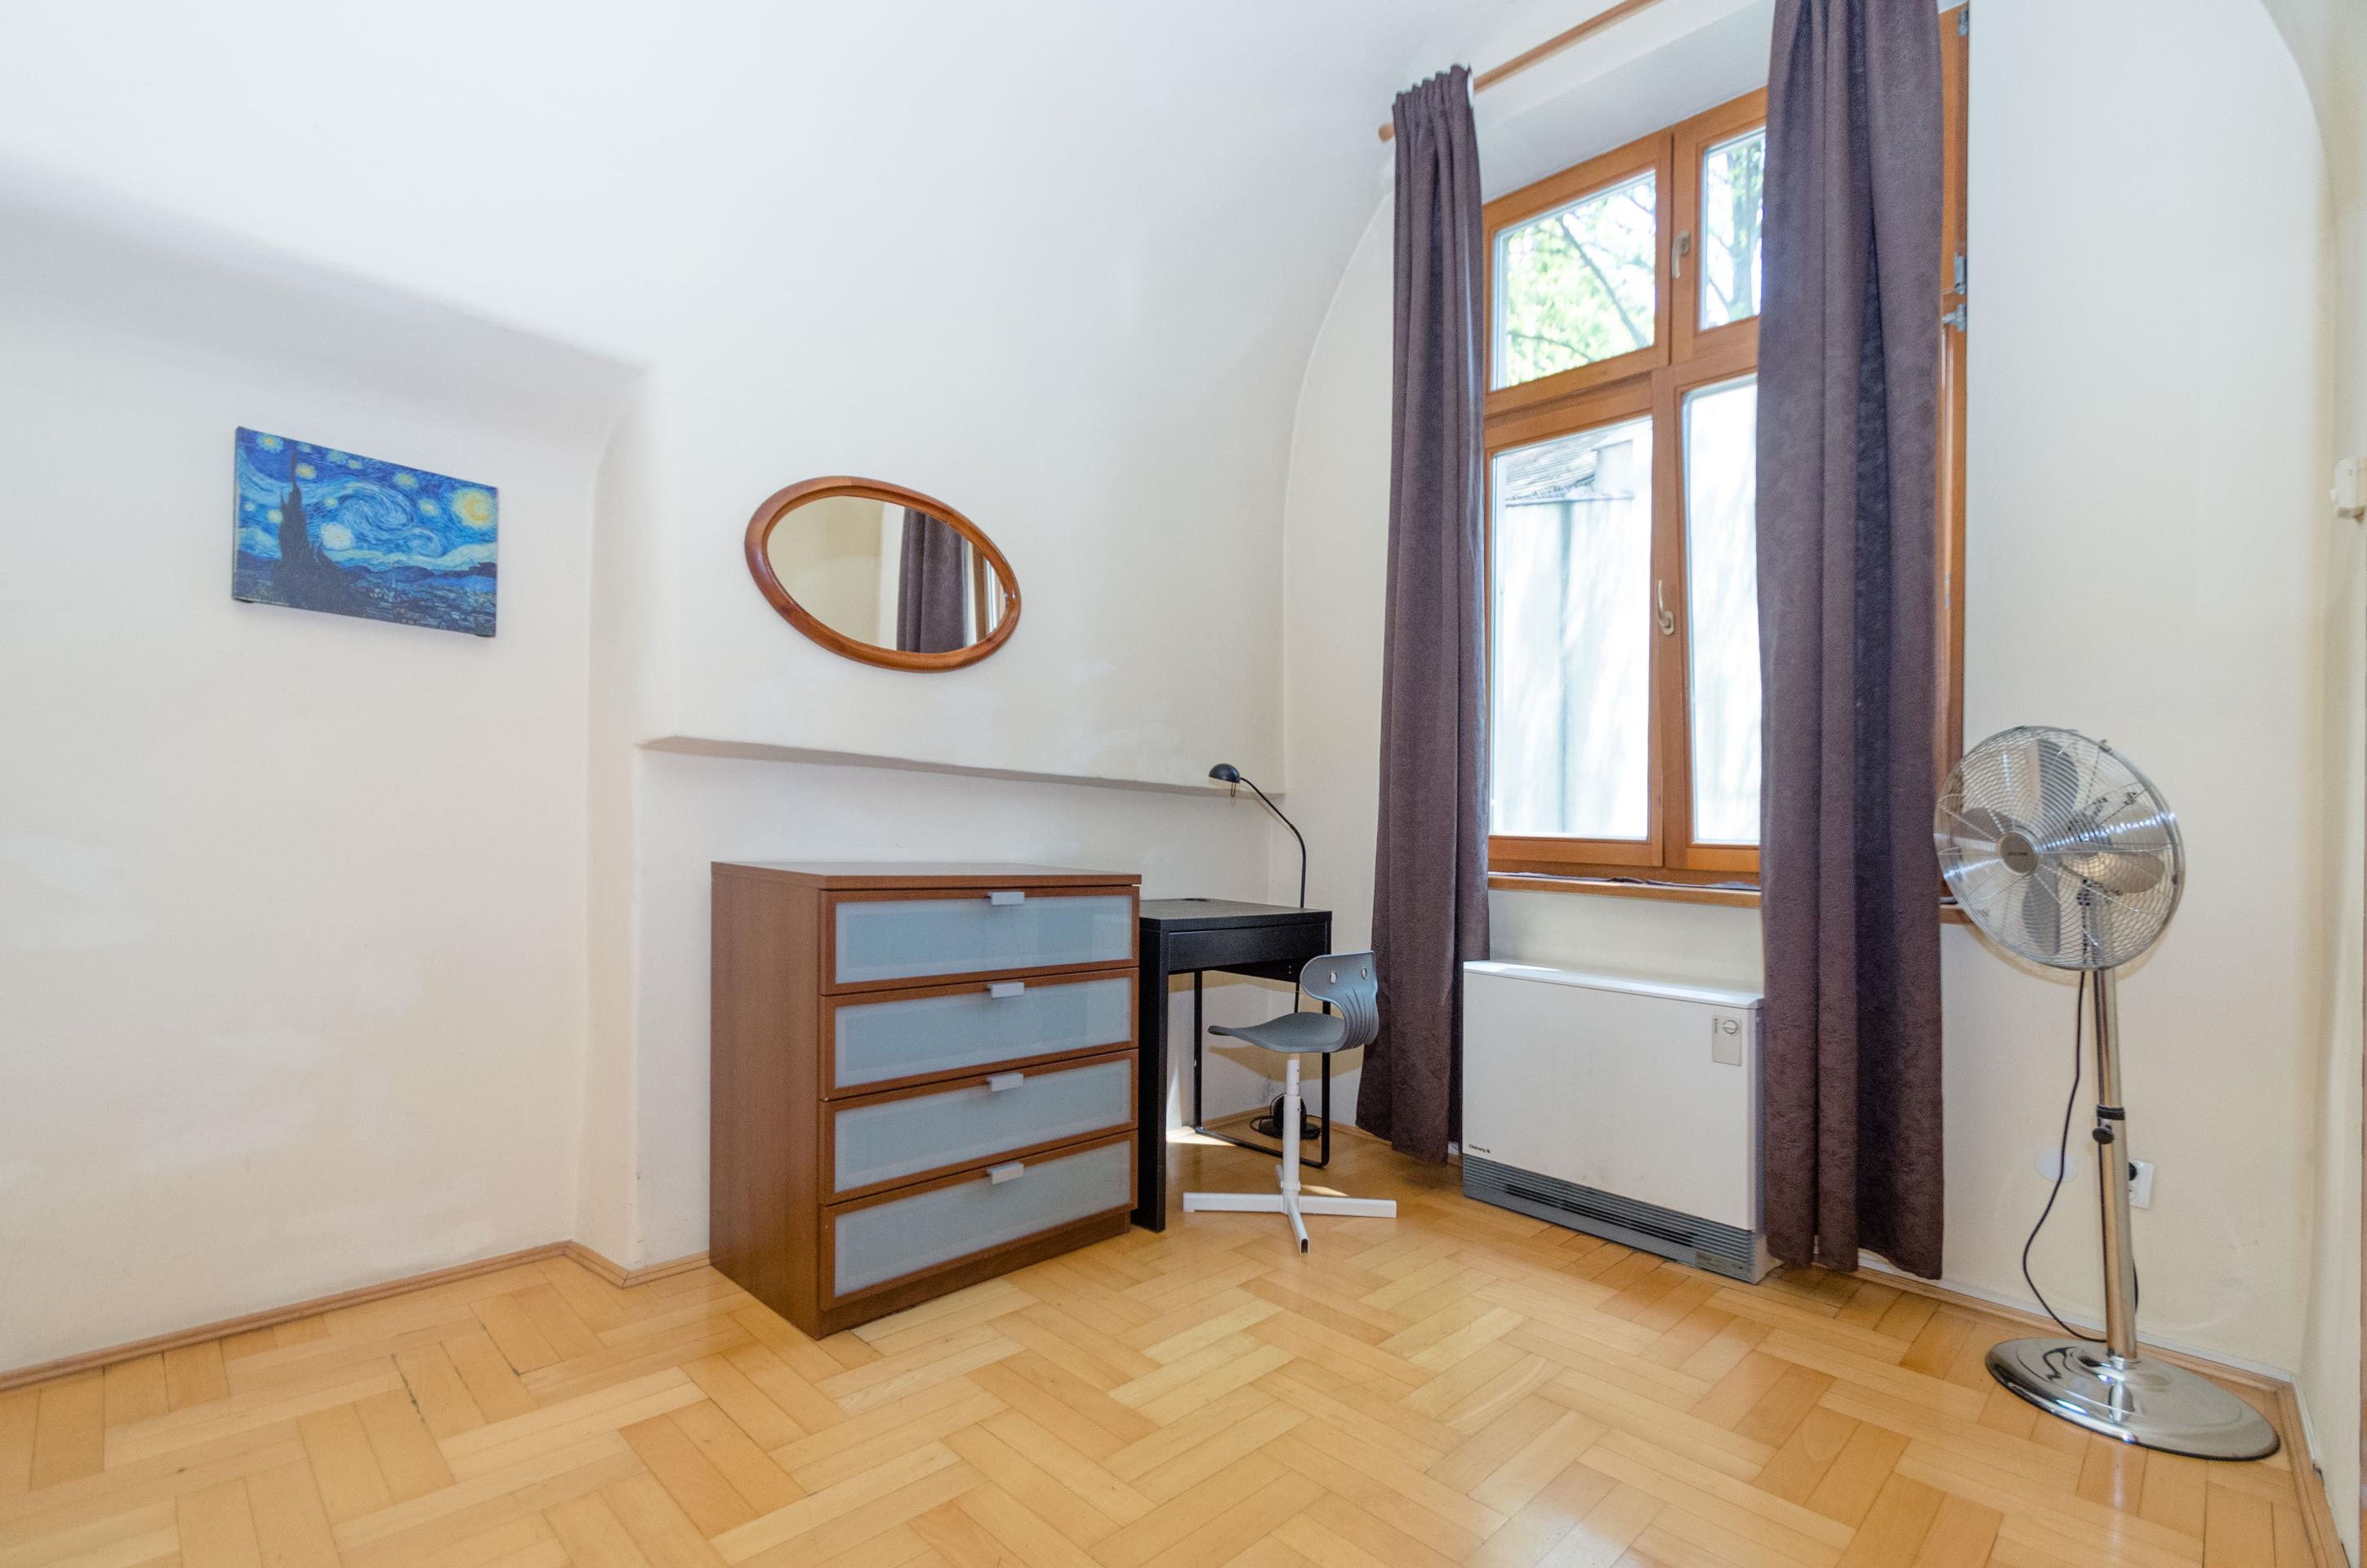 Apartment on Slawkowska street for sale